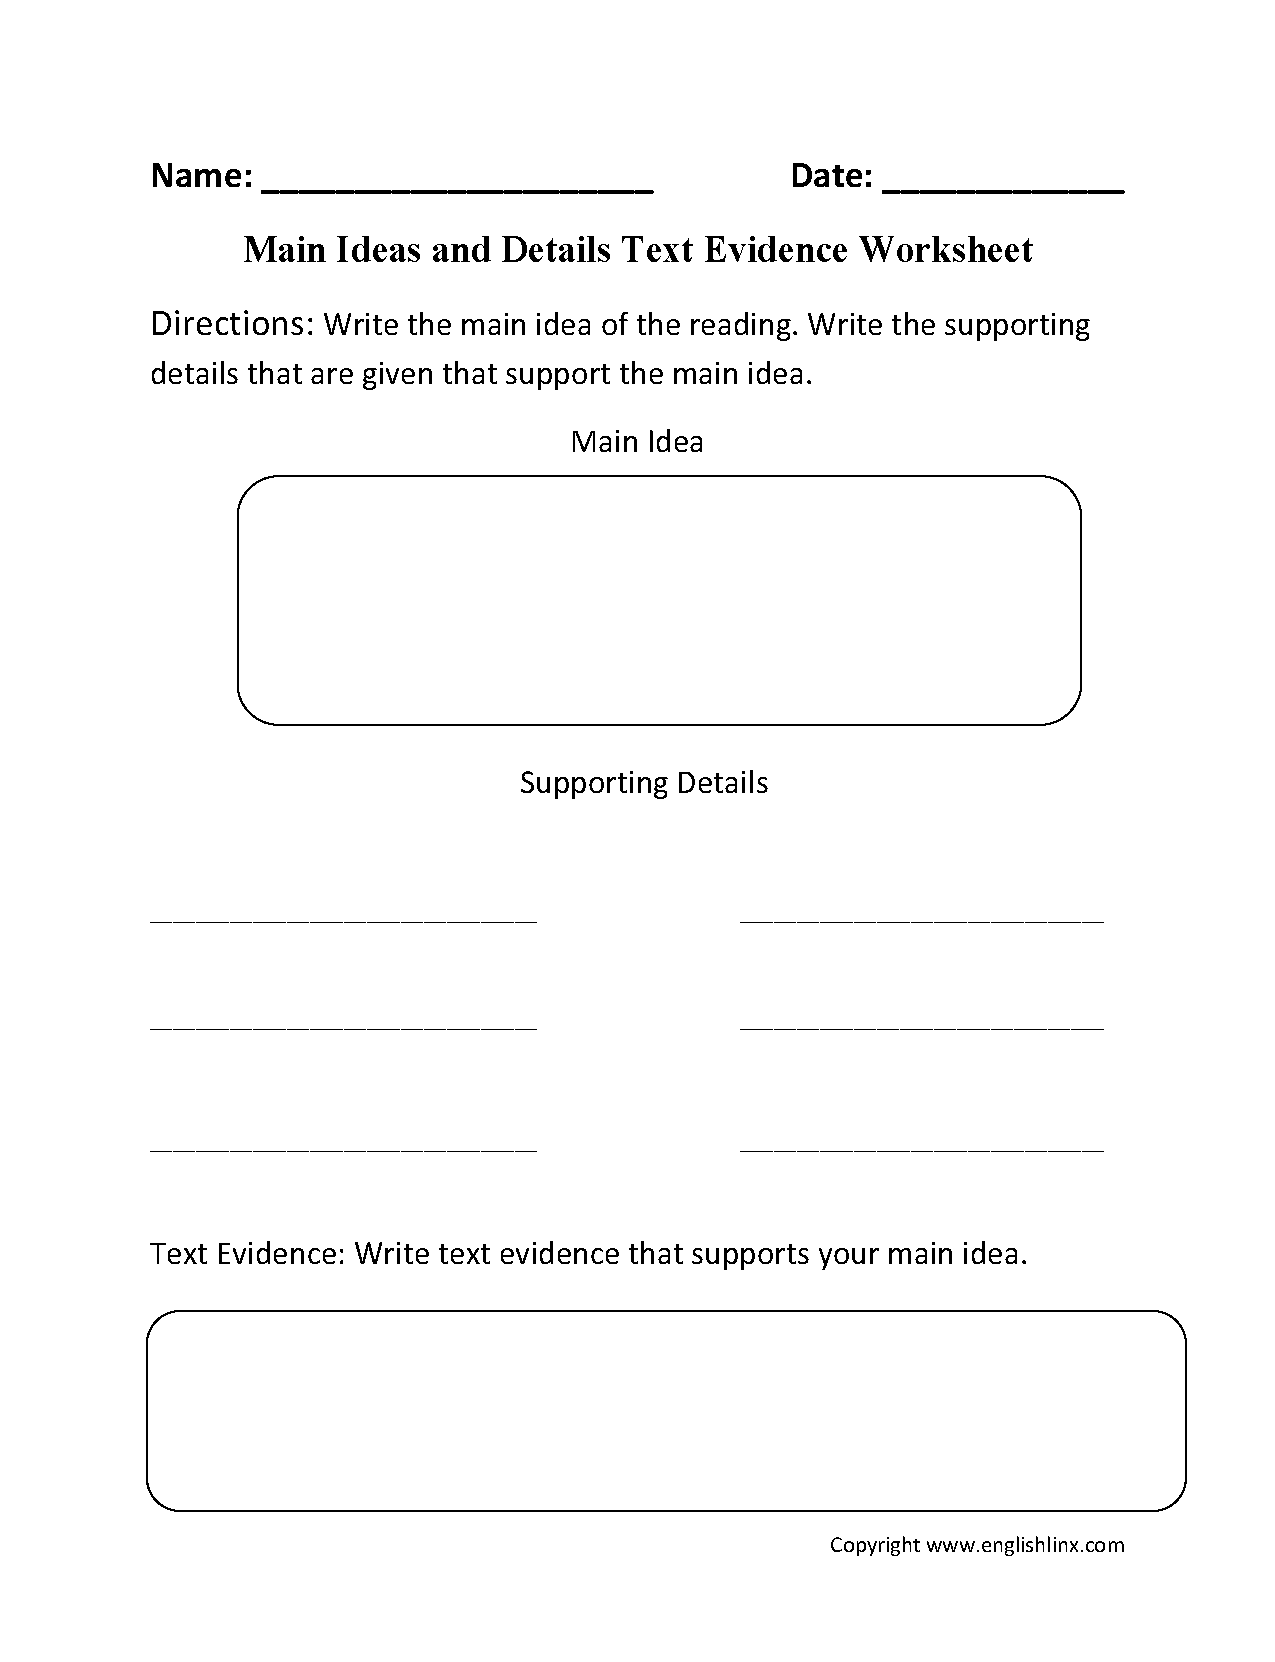 Main Idea Text Evidence Worksheet